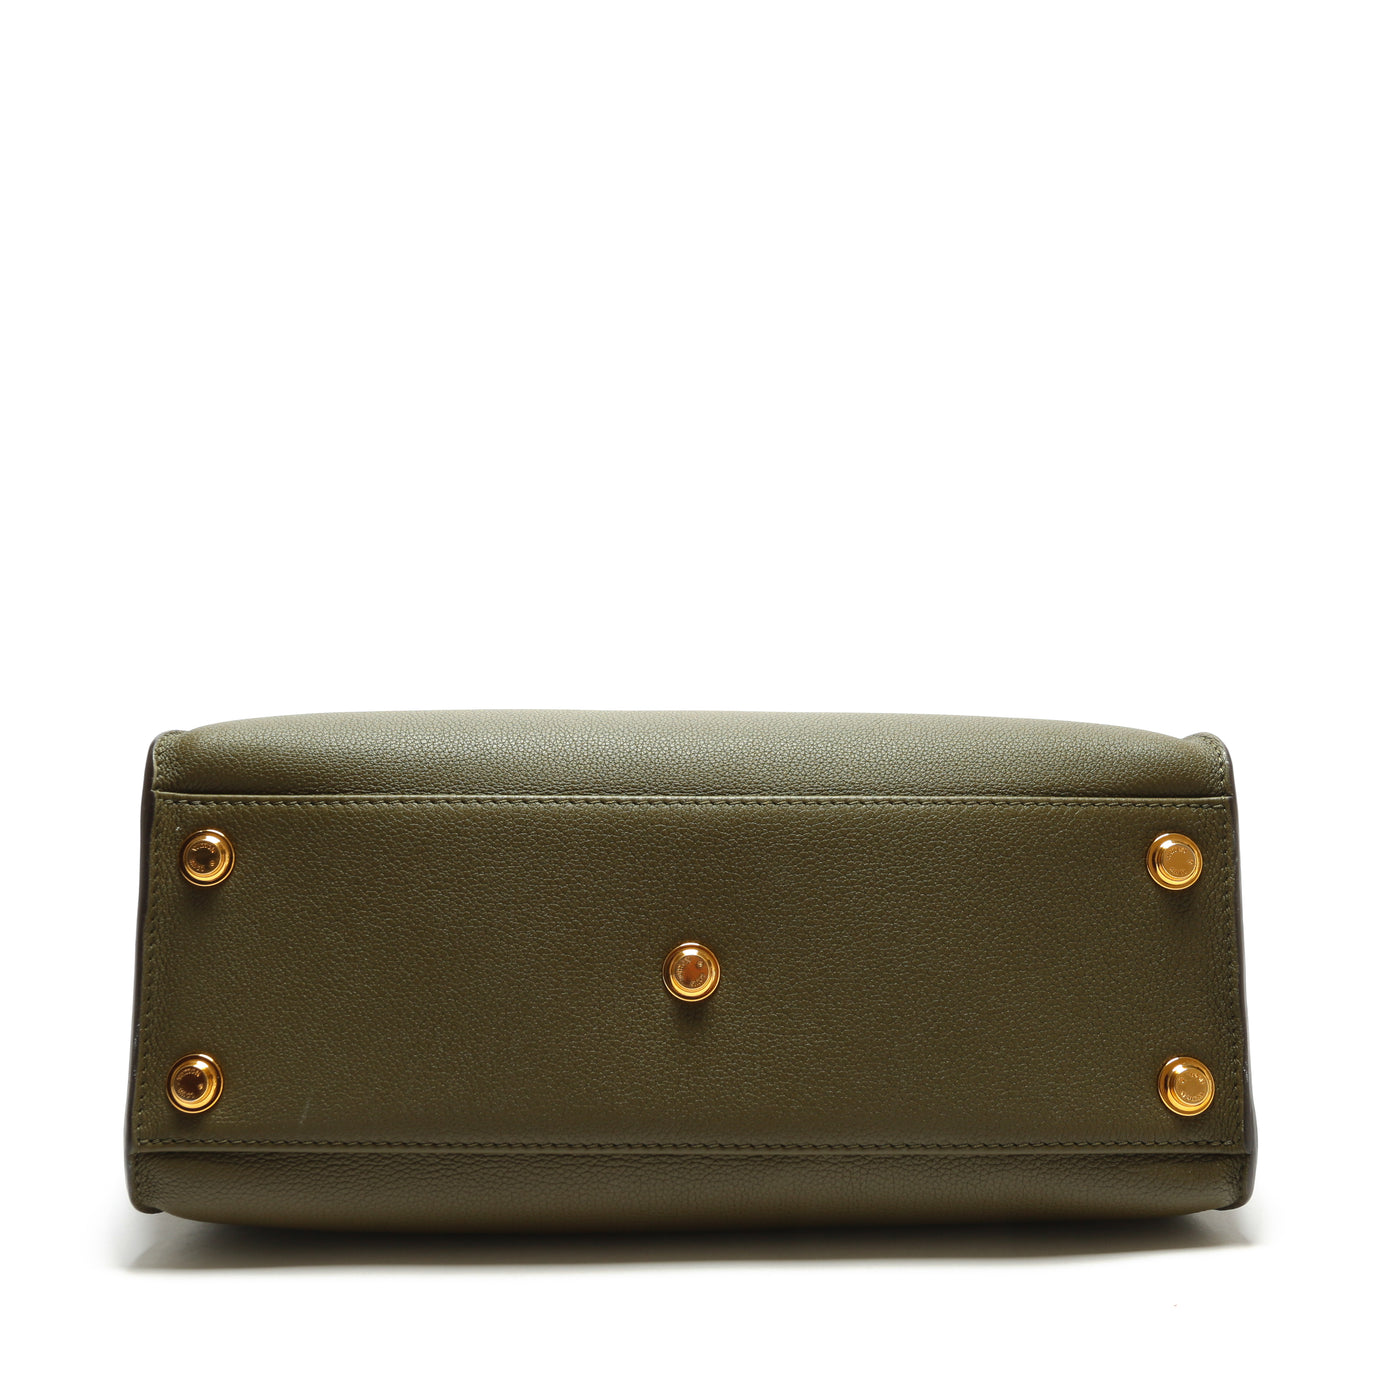 green: more than just olive  Vuitton bag, Bags, Louis vuitton handbags